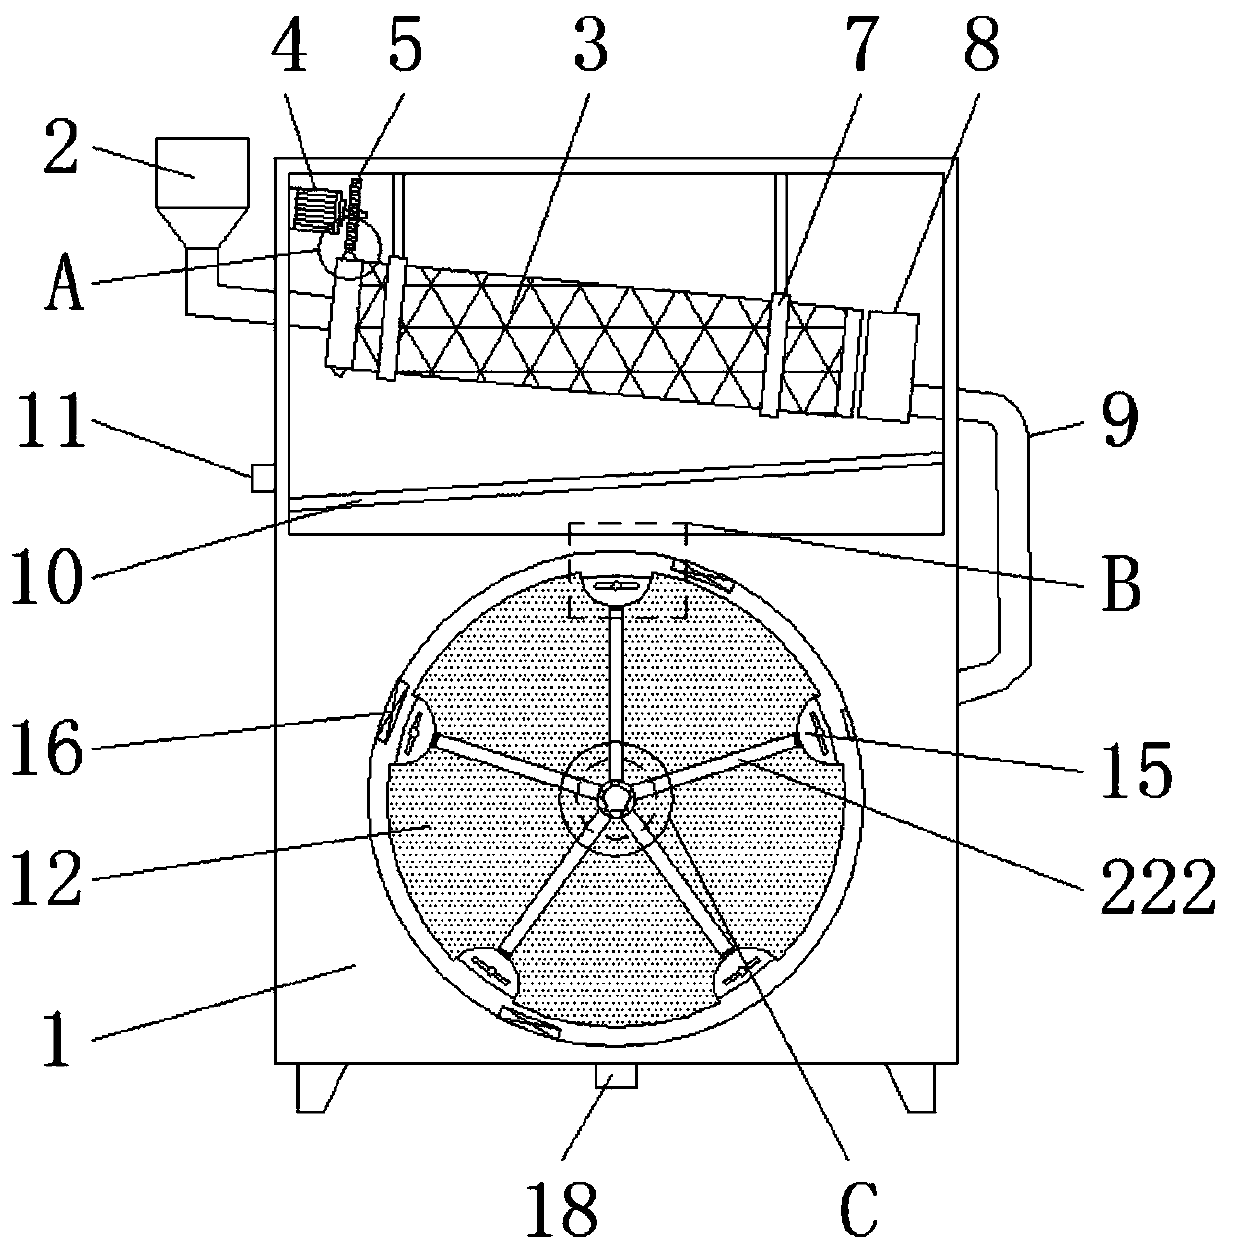 Screening and drying device for bract of globe artichoke